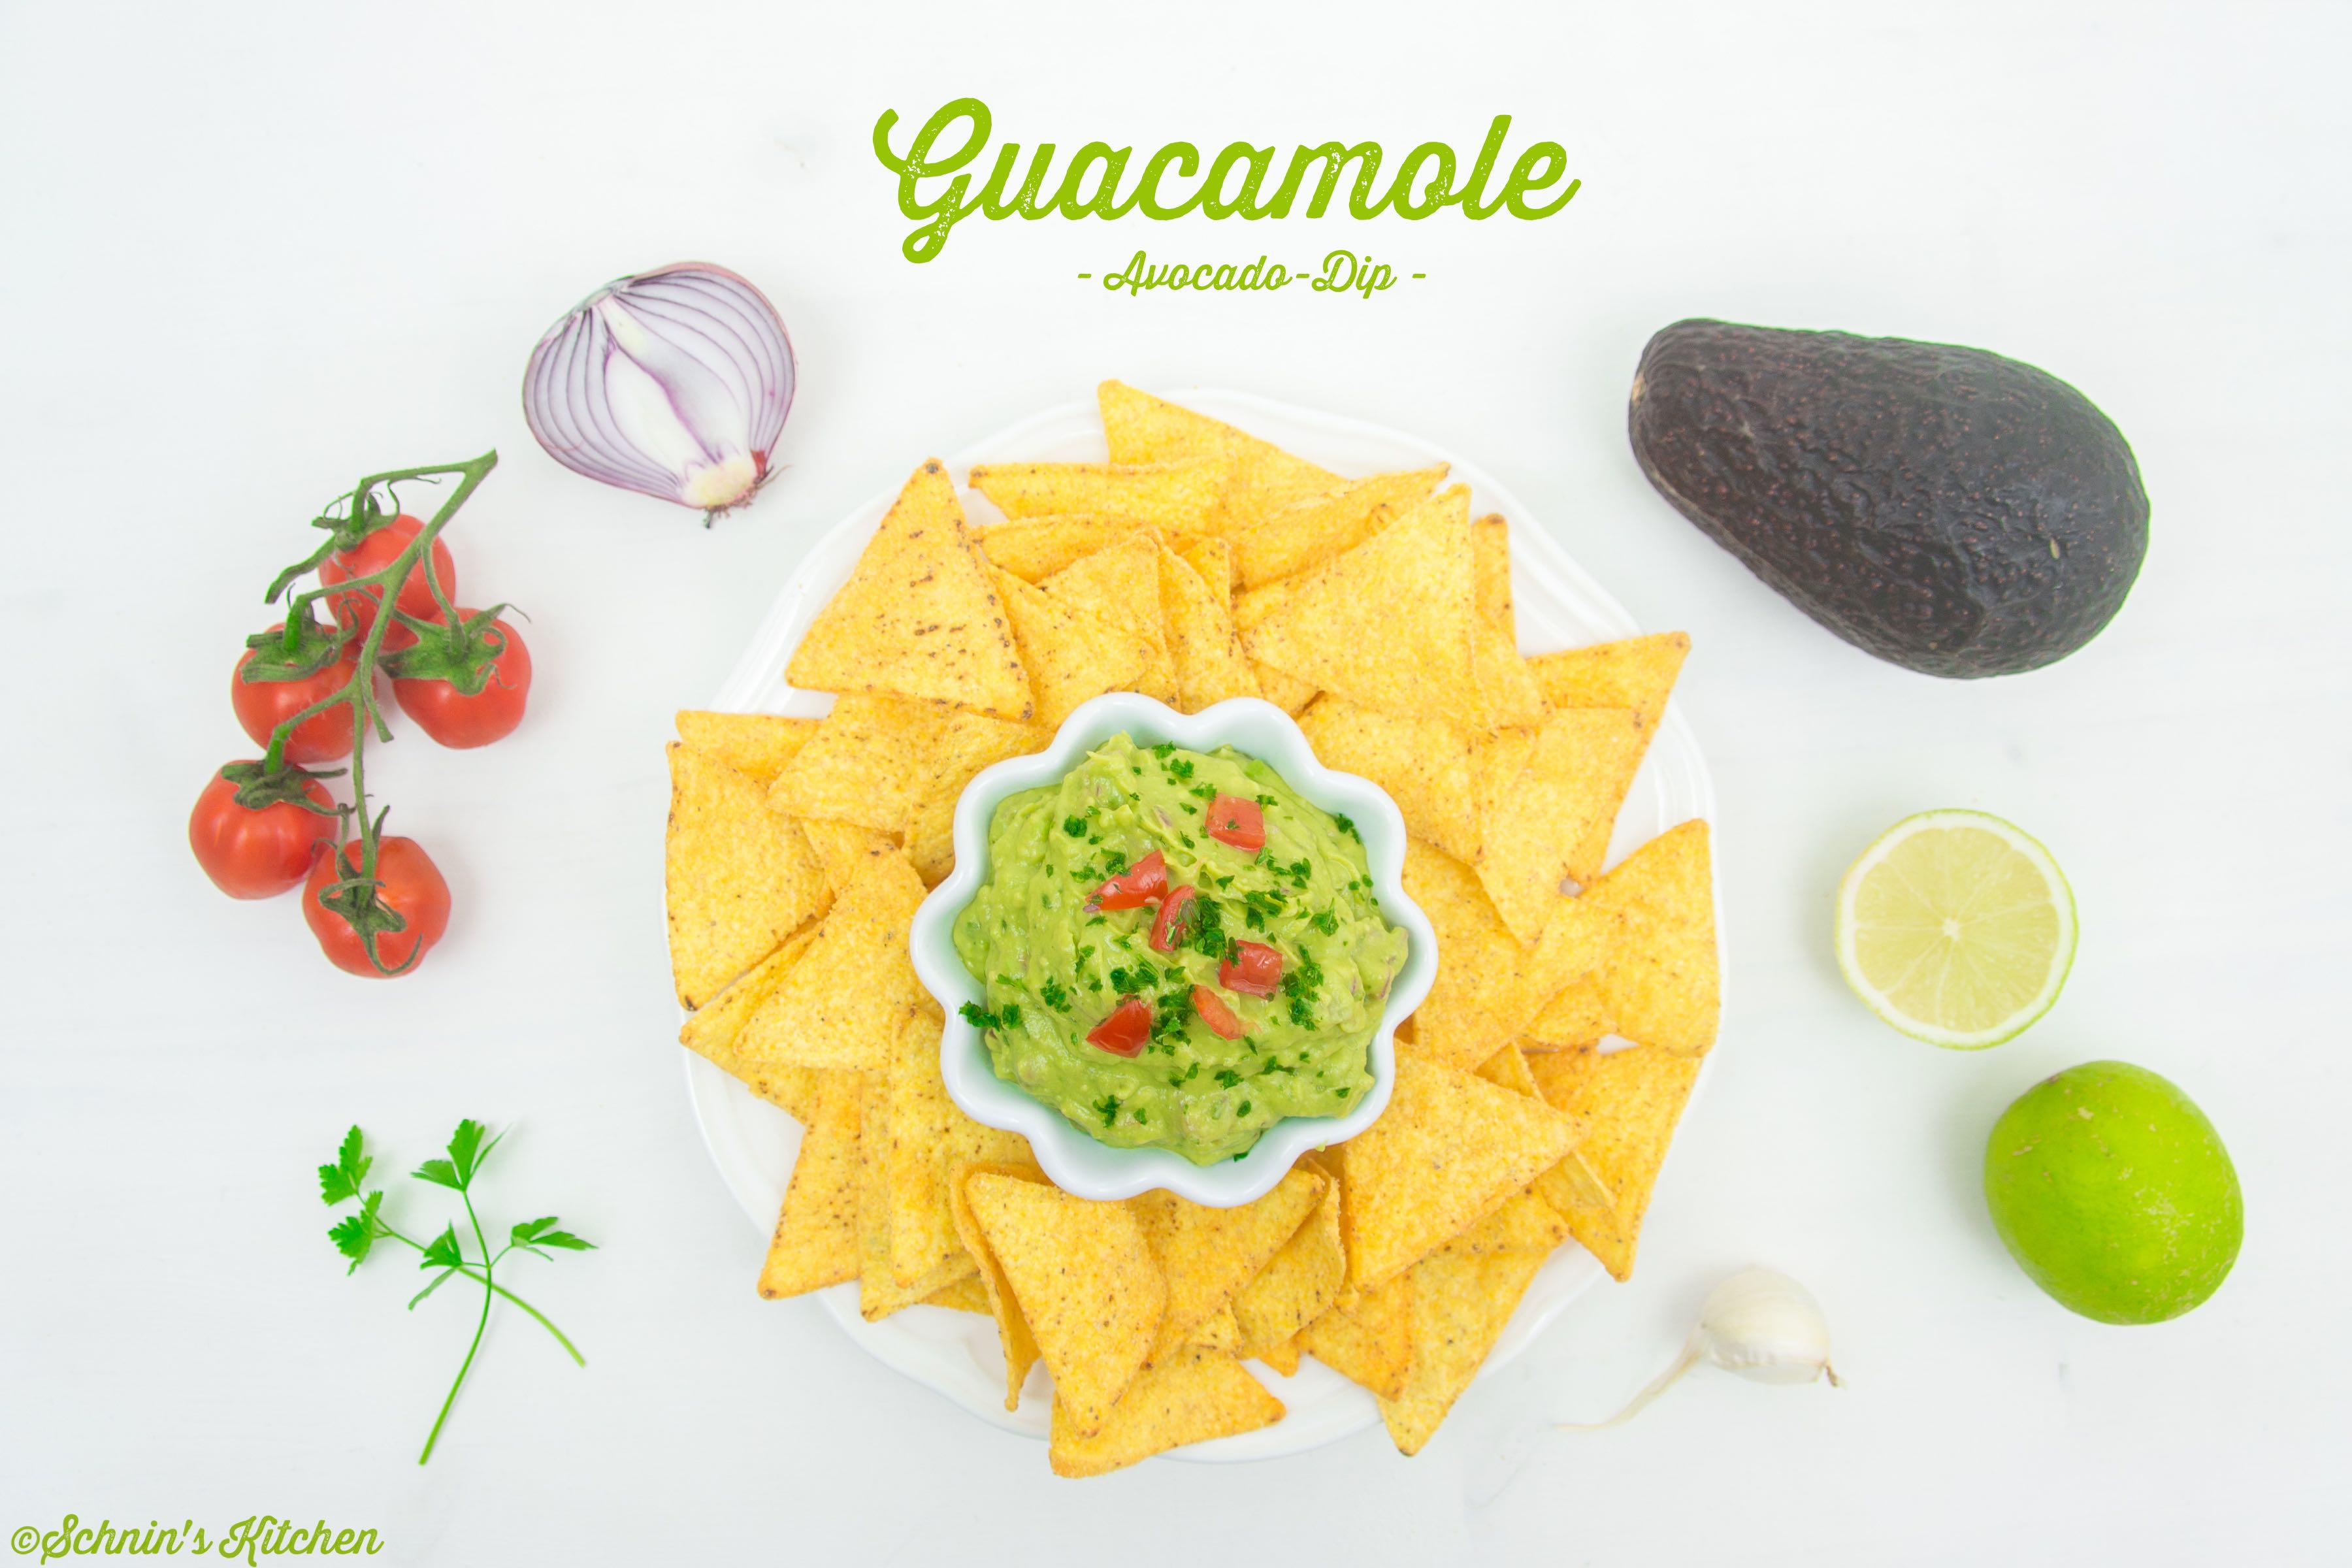 Schnin's Kitchen: Guacamole - mexikanischer Avocado-Dip